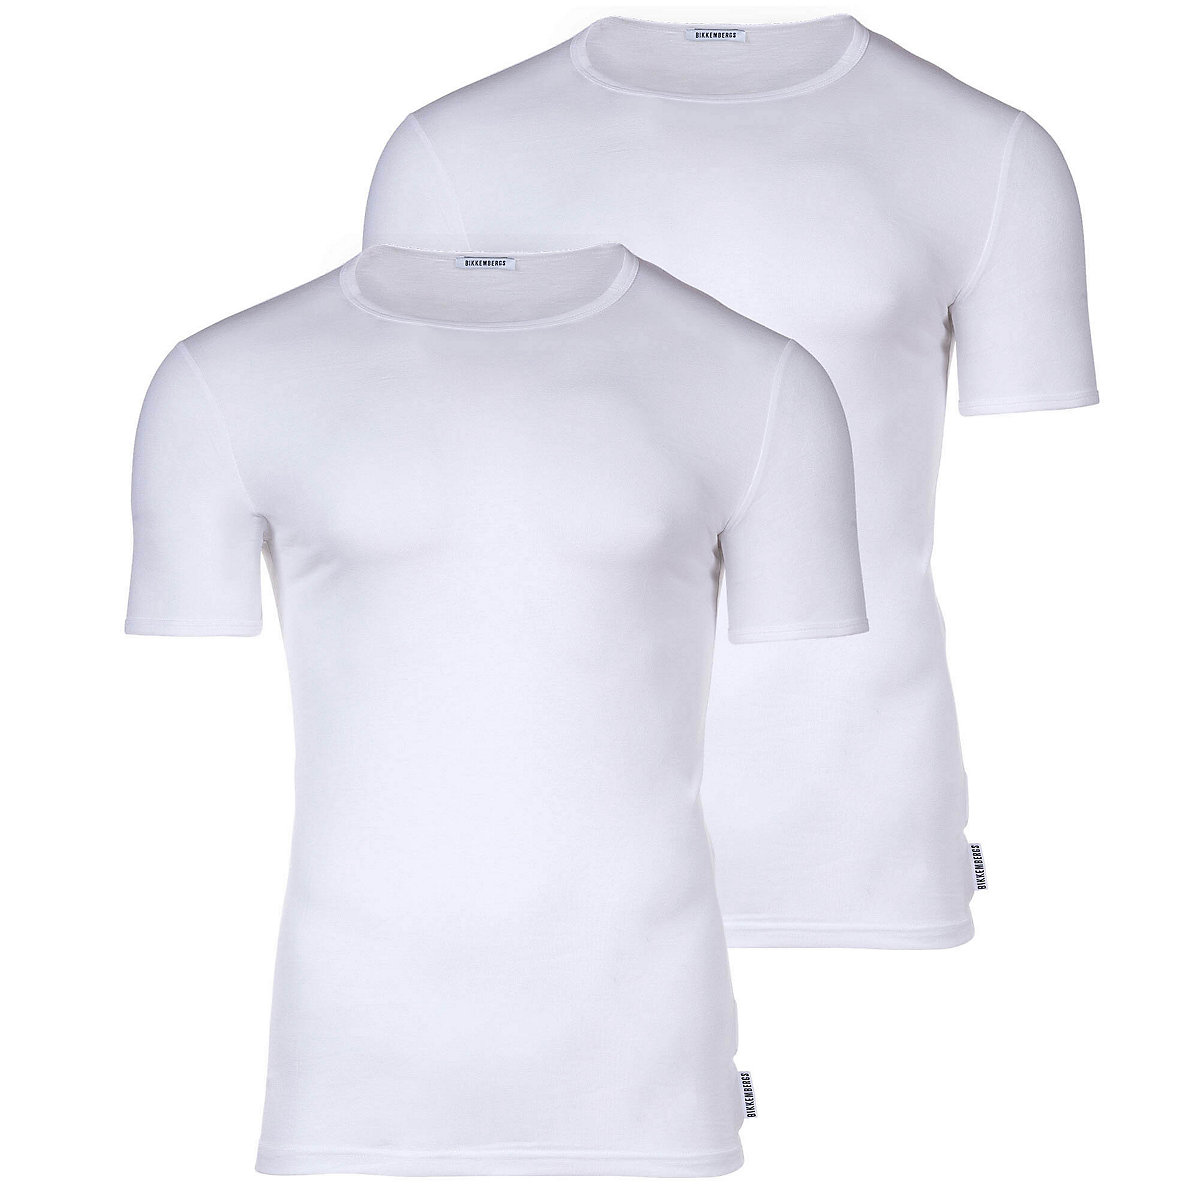 Bikkembergs Herren T-Shirt 2er Pack BI-PACK T-SHIRT Unterhemd Rundhals Cotton Stretch T-Shirts weiß